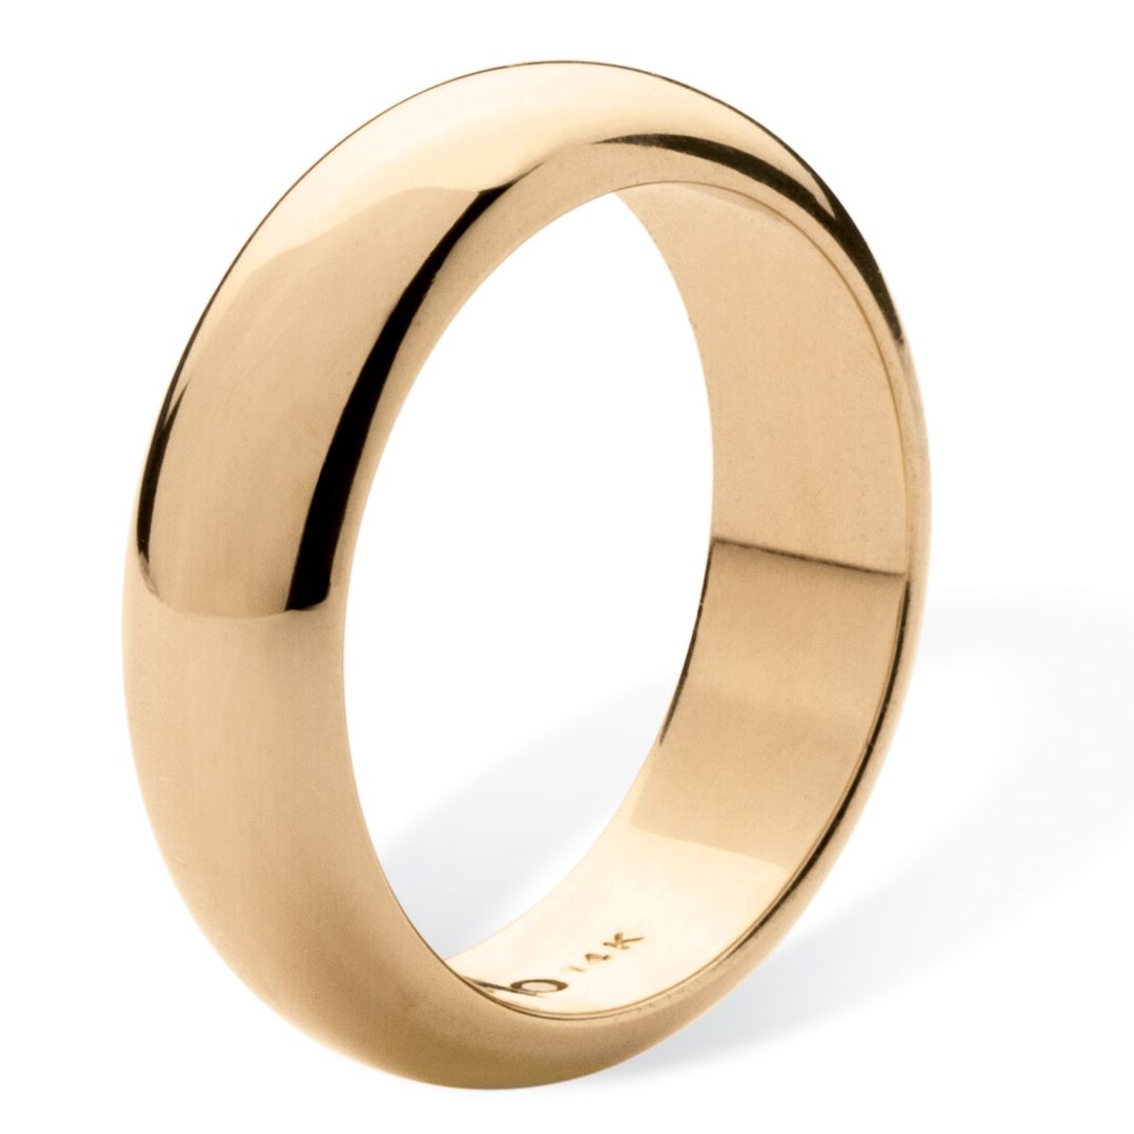 14k Gold Ultra-Lightweight Nano Diamond Resin Filled Wedding Band (6mm) Sizes 6-12 - Image 2 of 5